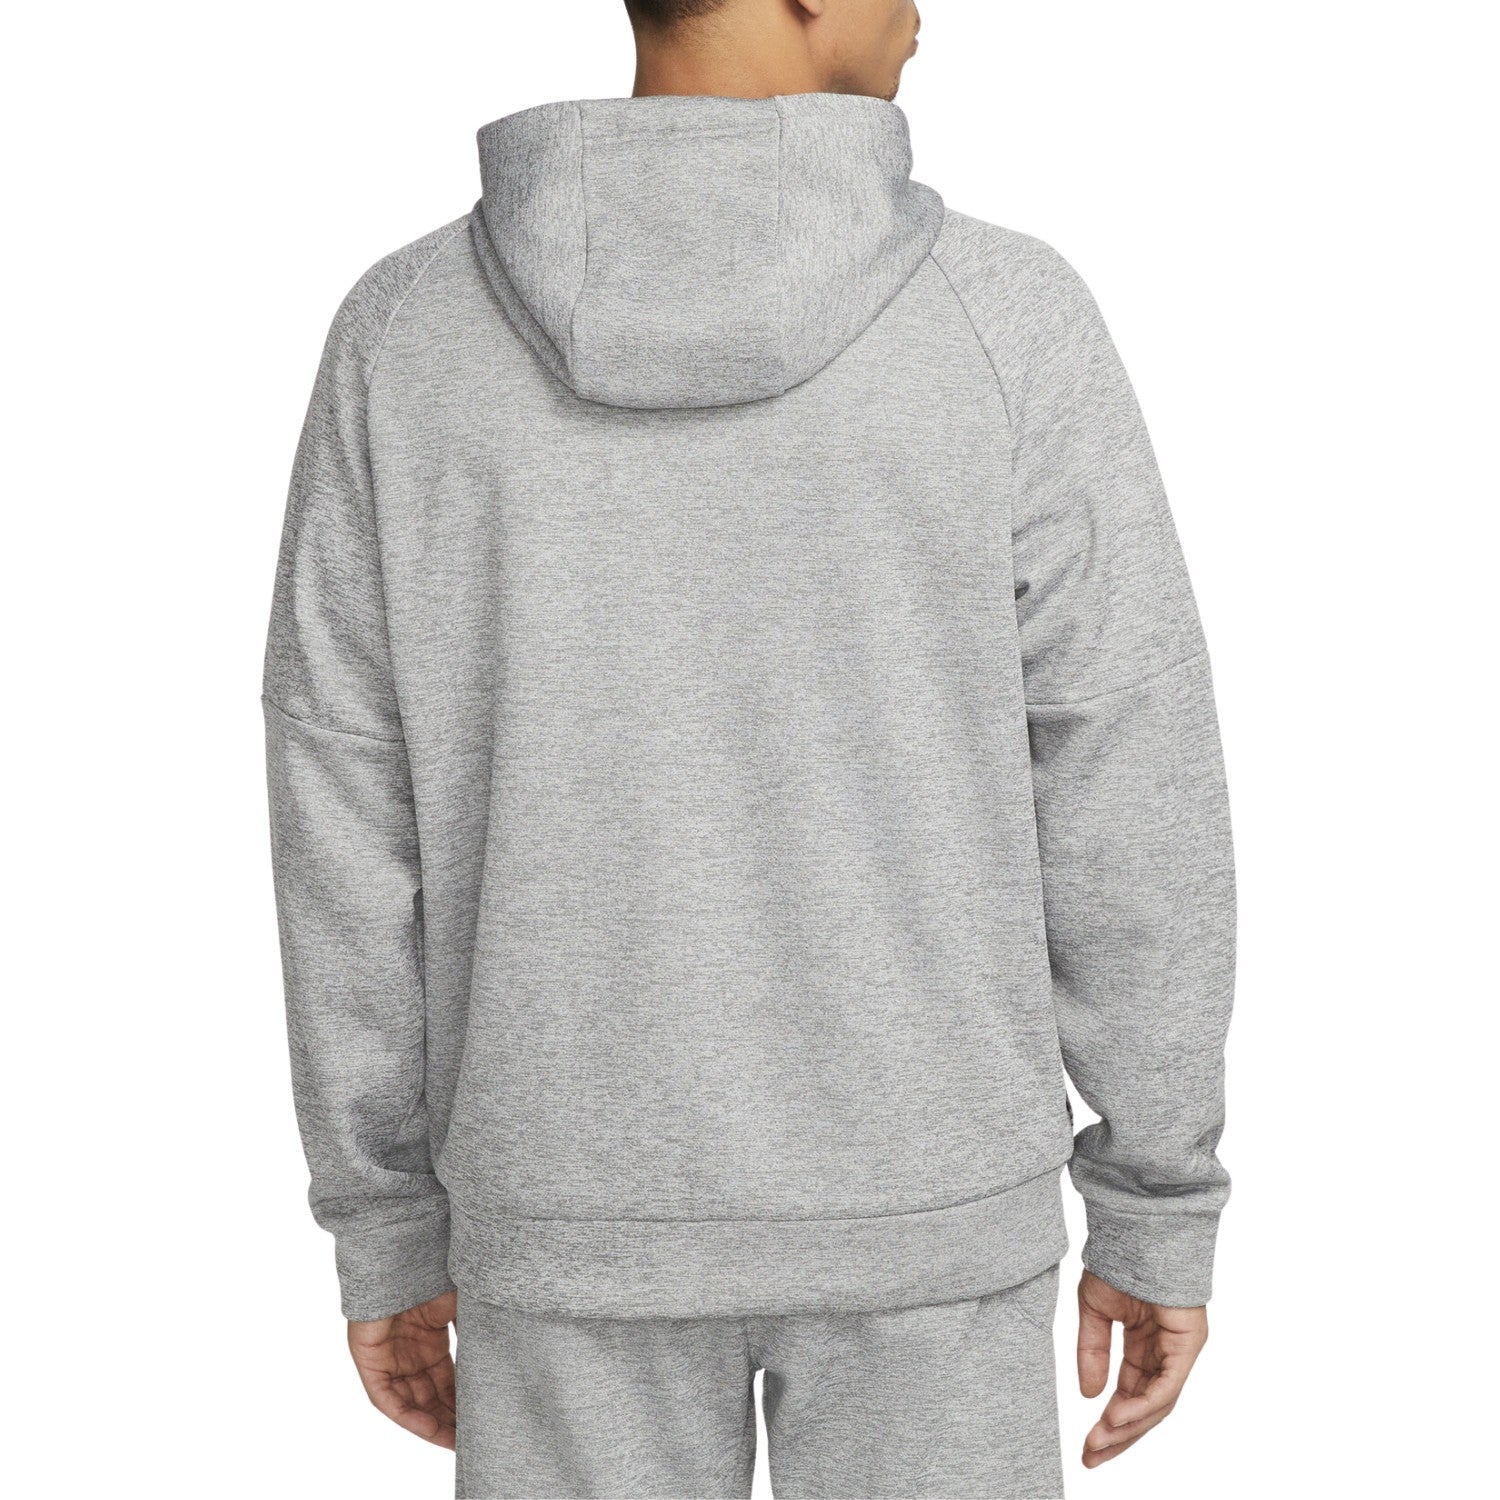 Nike Mens Therma Fit Grey Hoodie Mens Style : Dq4830